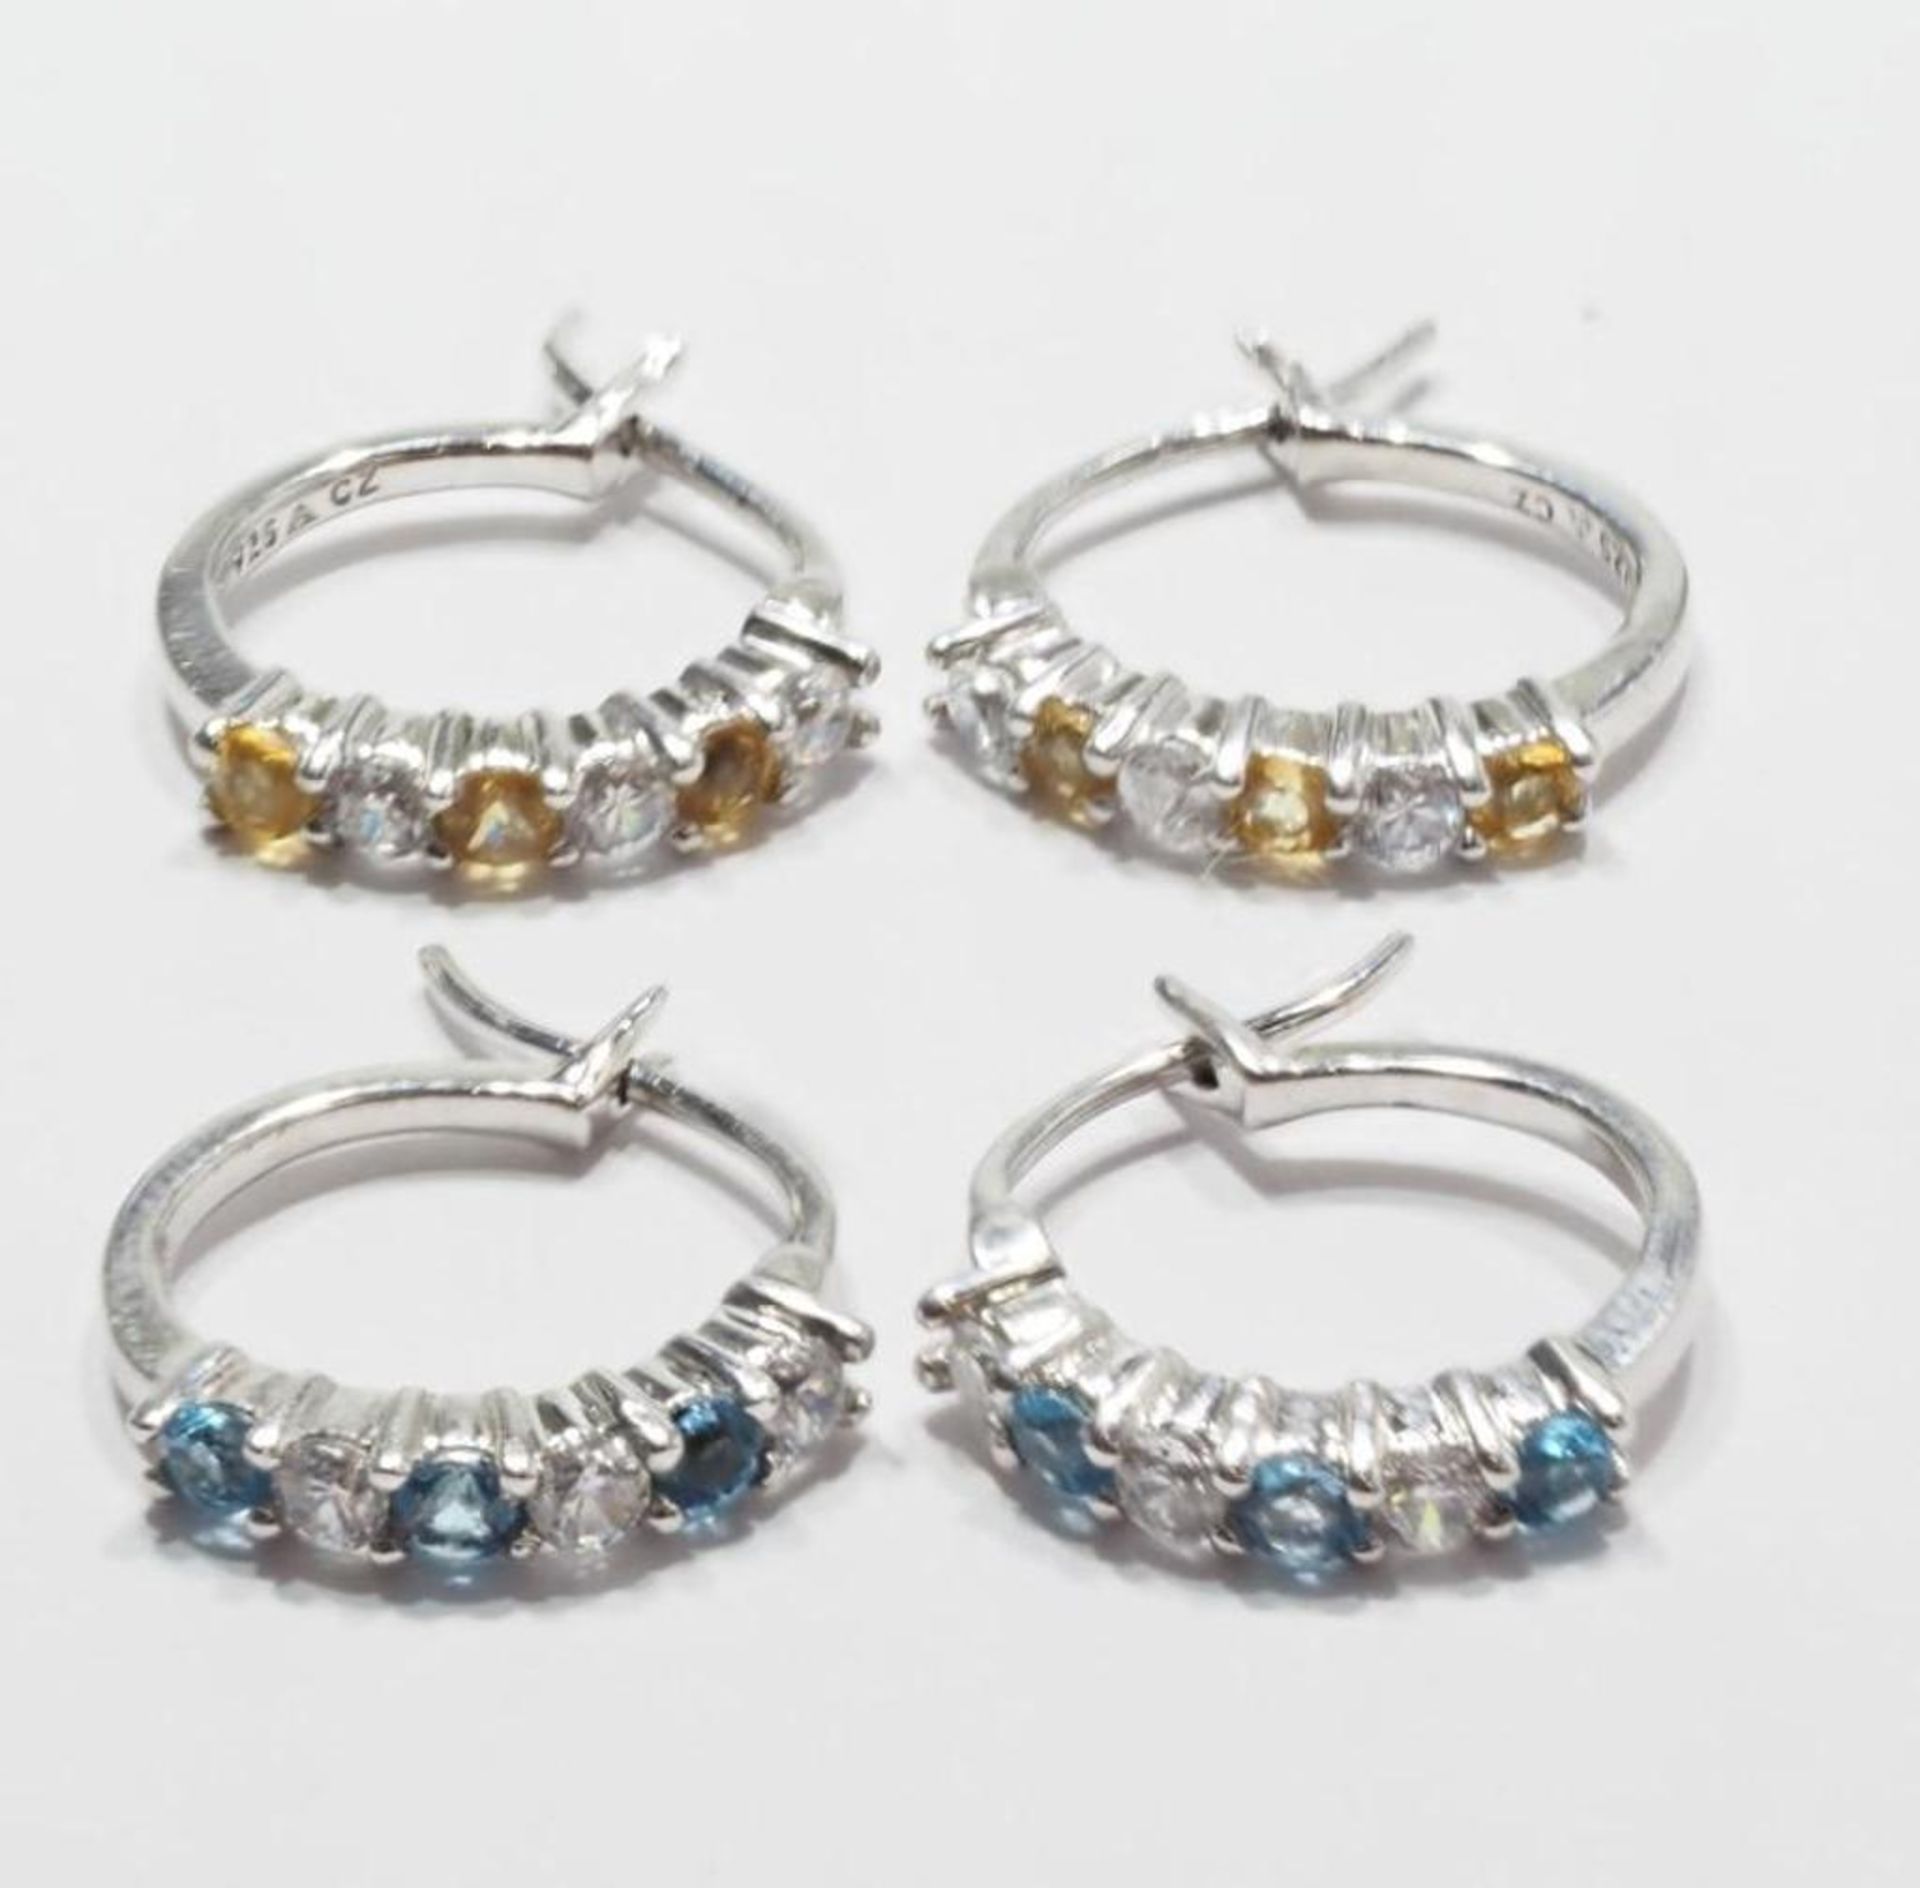 2 Sterling Silver Citrine and Topaz Earrings (Birthstone Nov & Dec) Retail $200